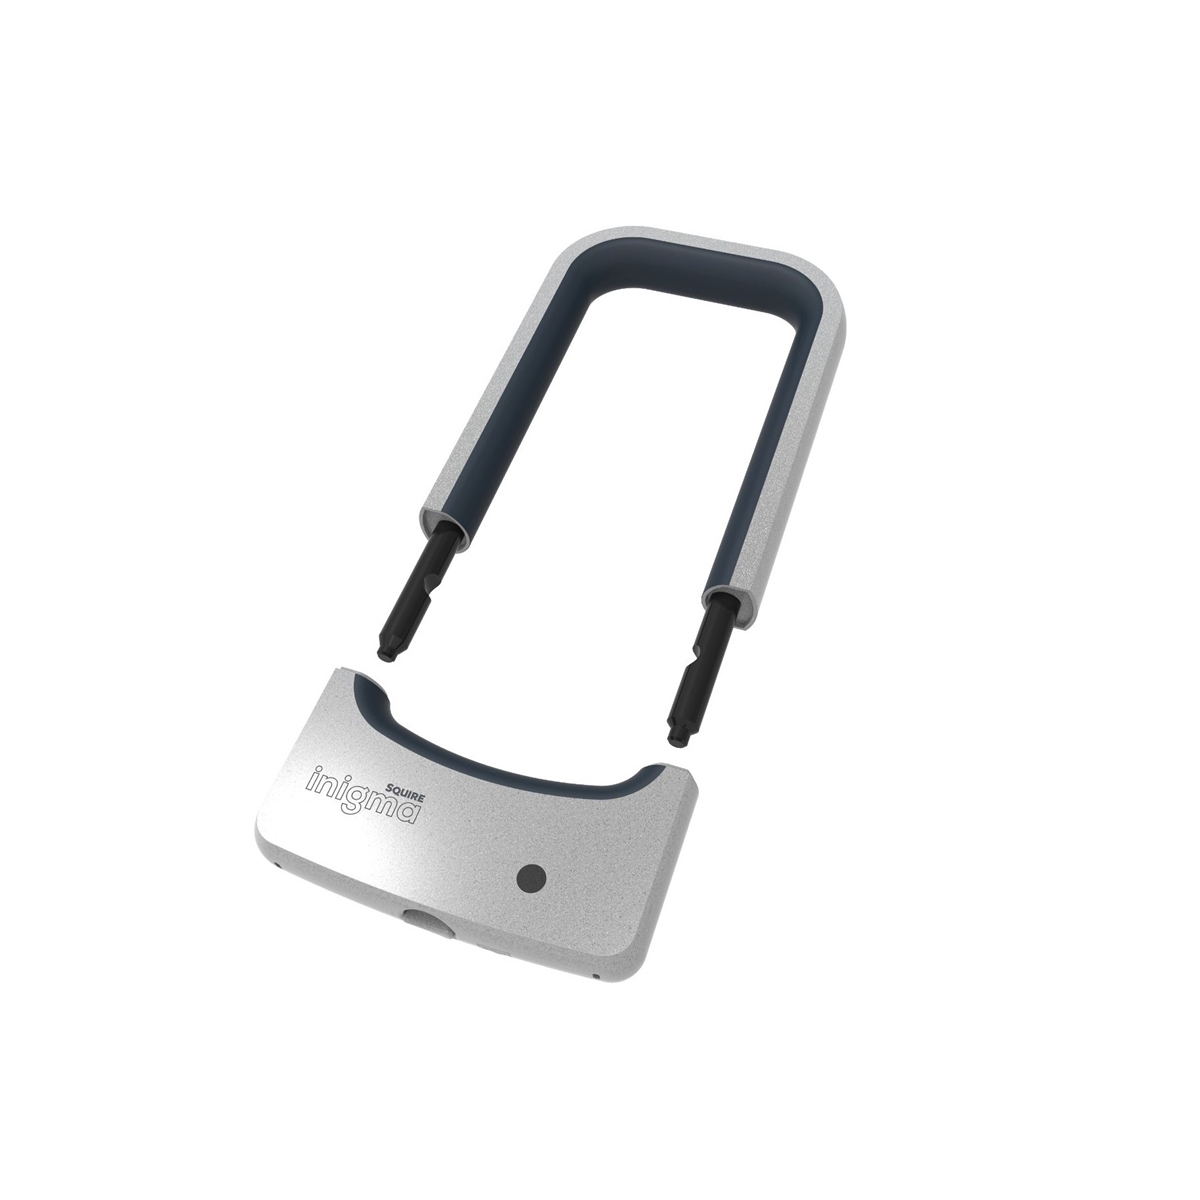 Antivol vélo Bluetooth Inigma BL1 190mm ouverture / fermeture avec Smartphone